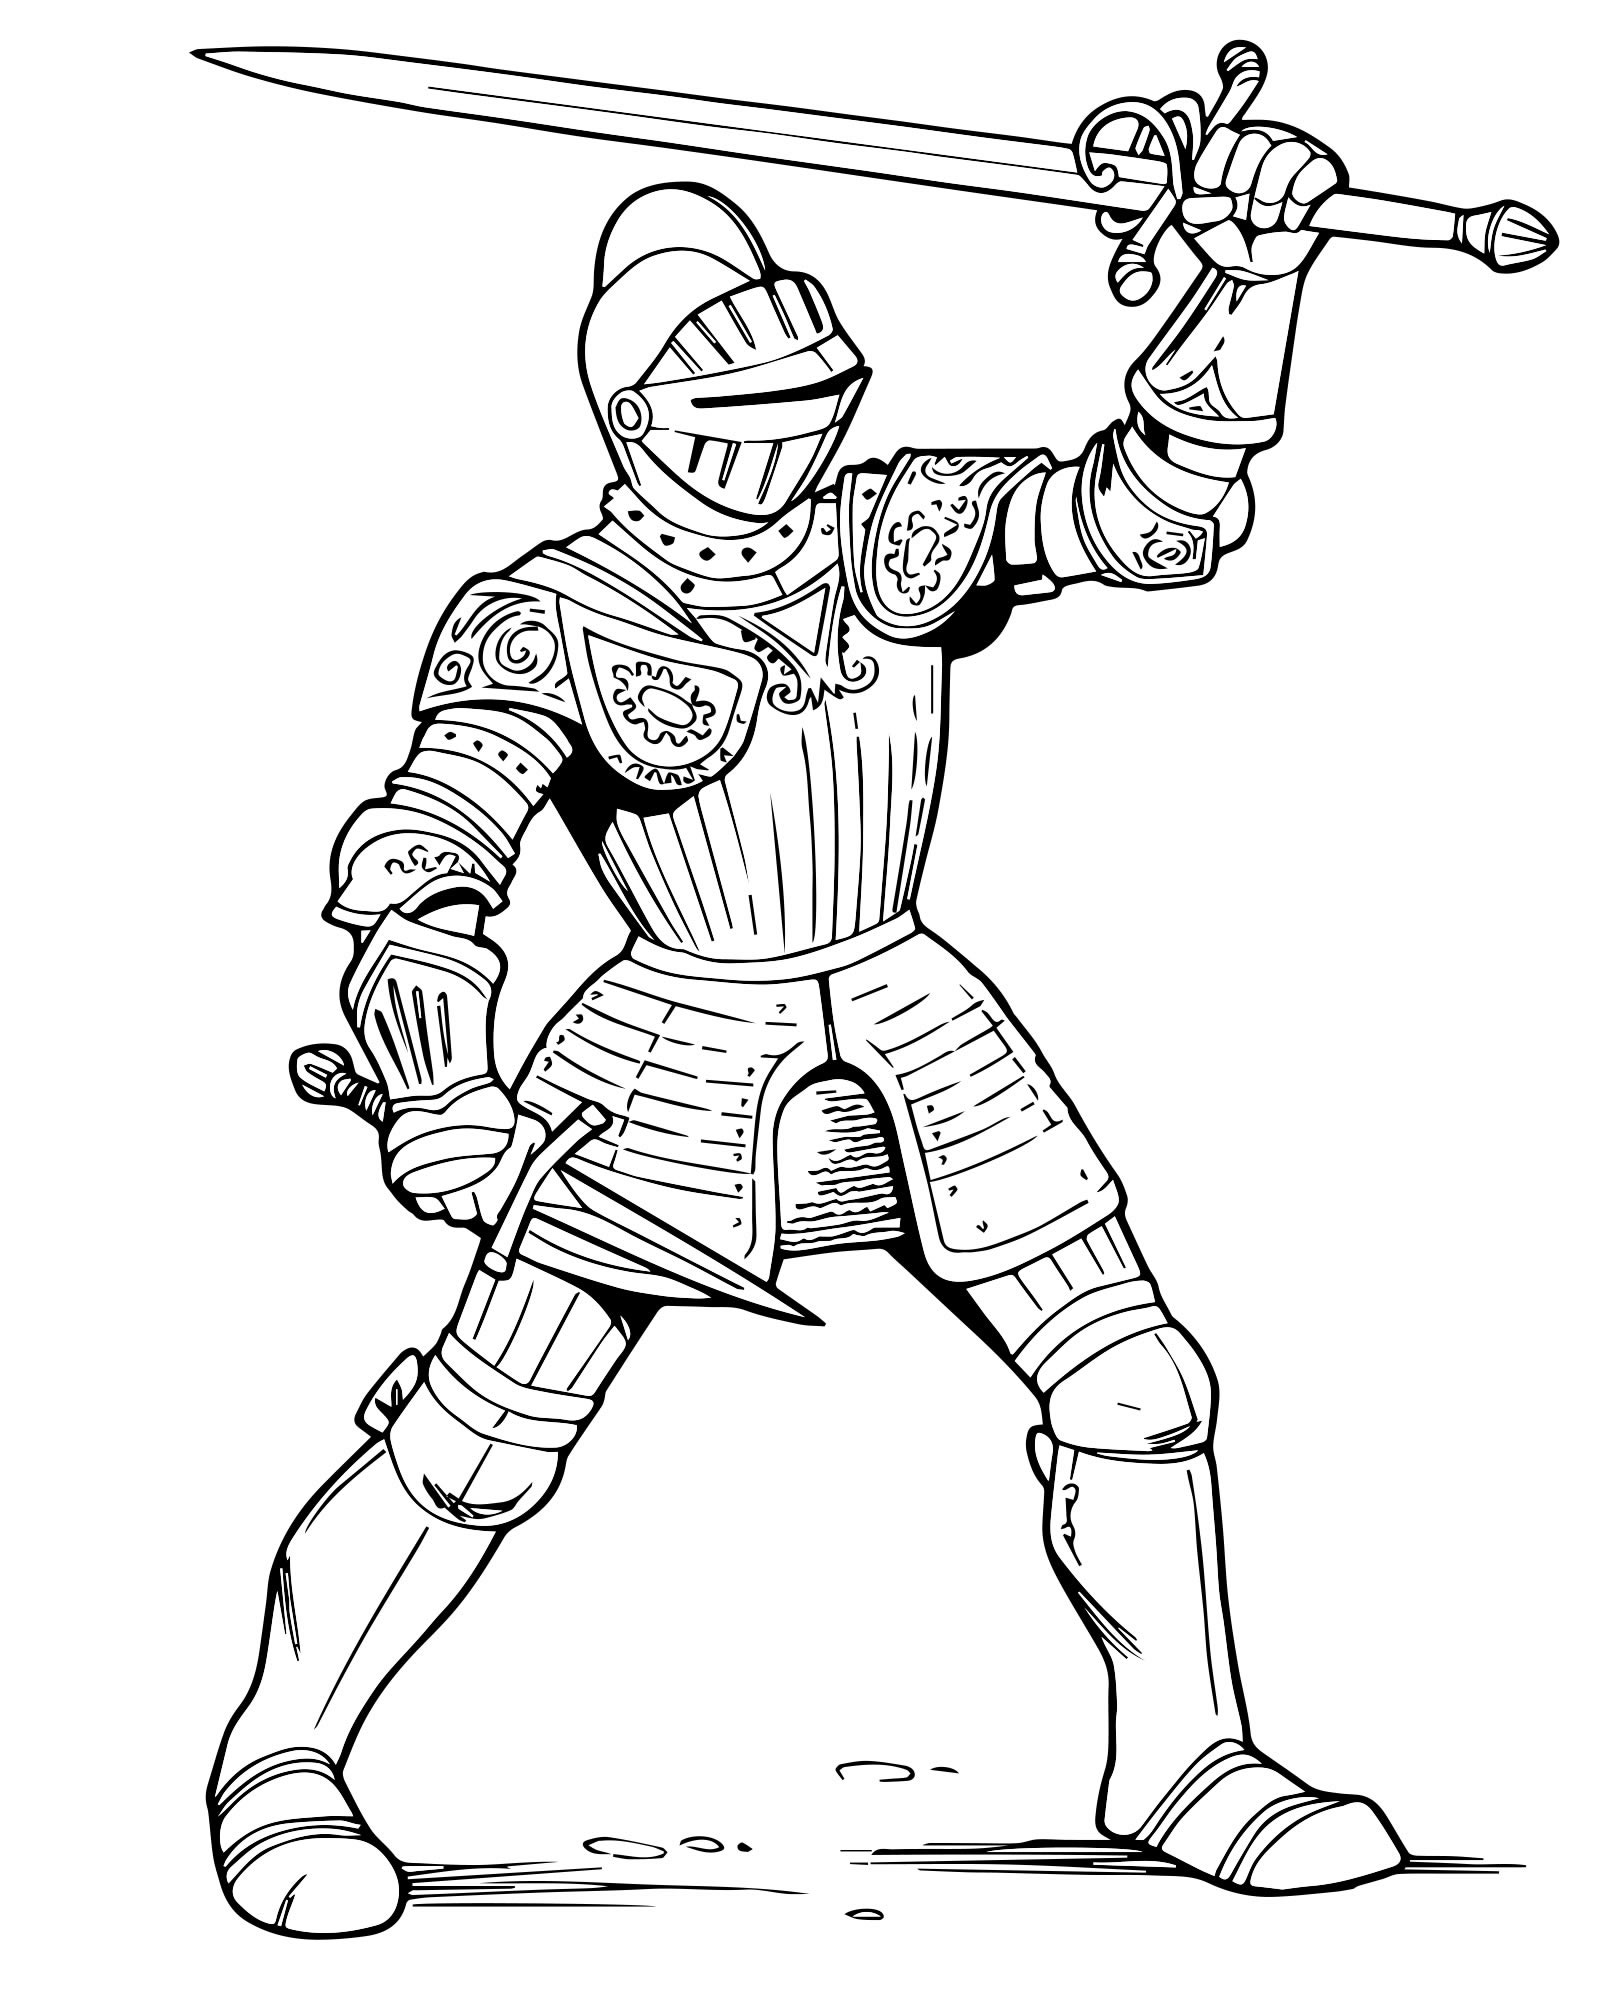 Рисунок рыцаря